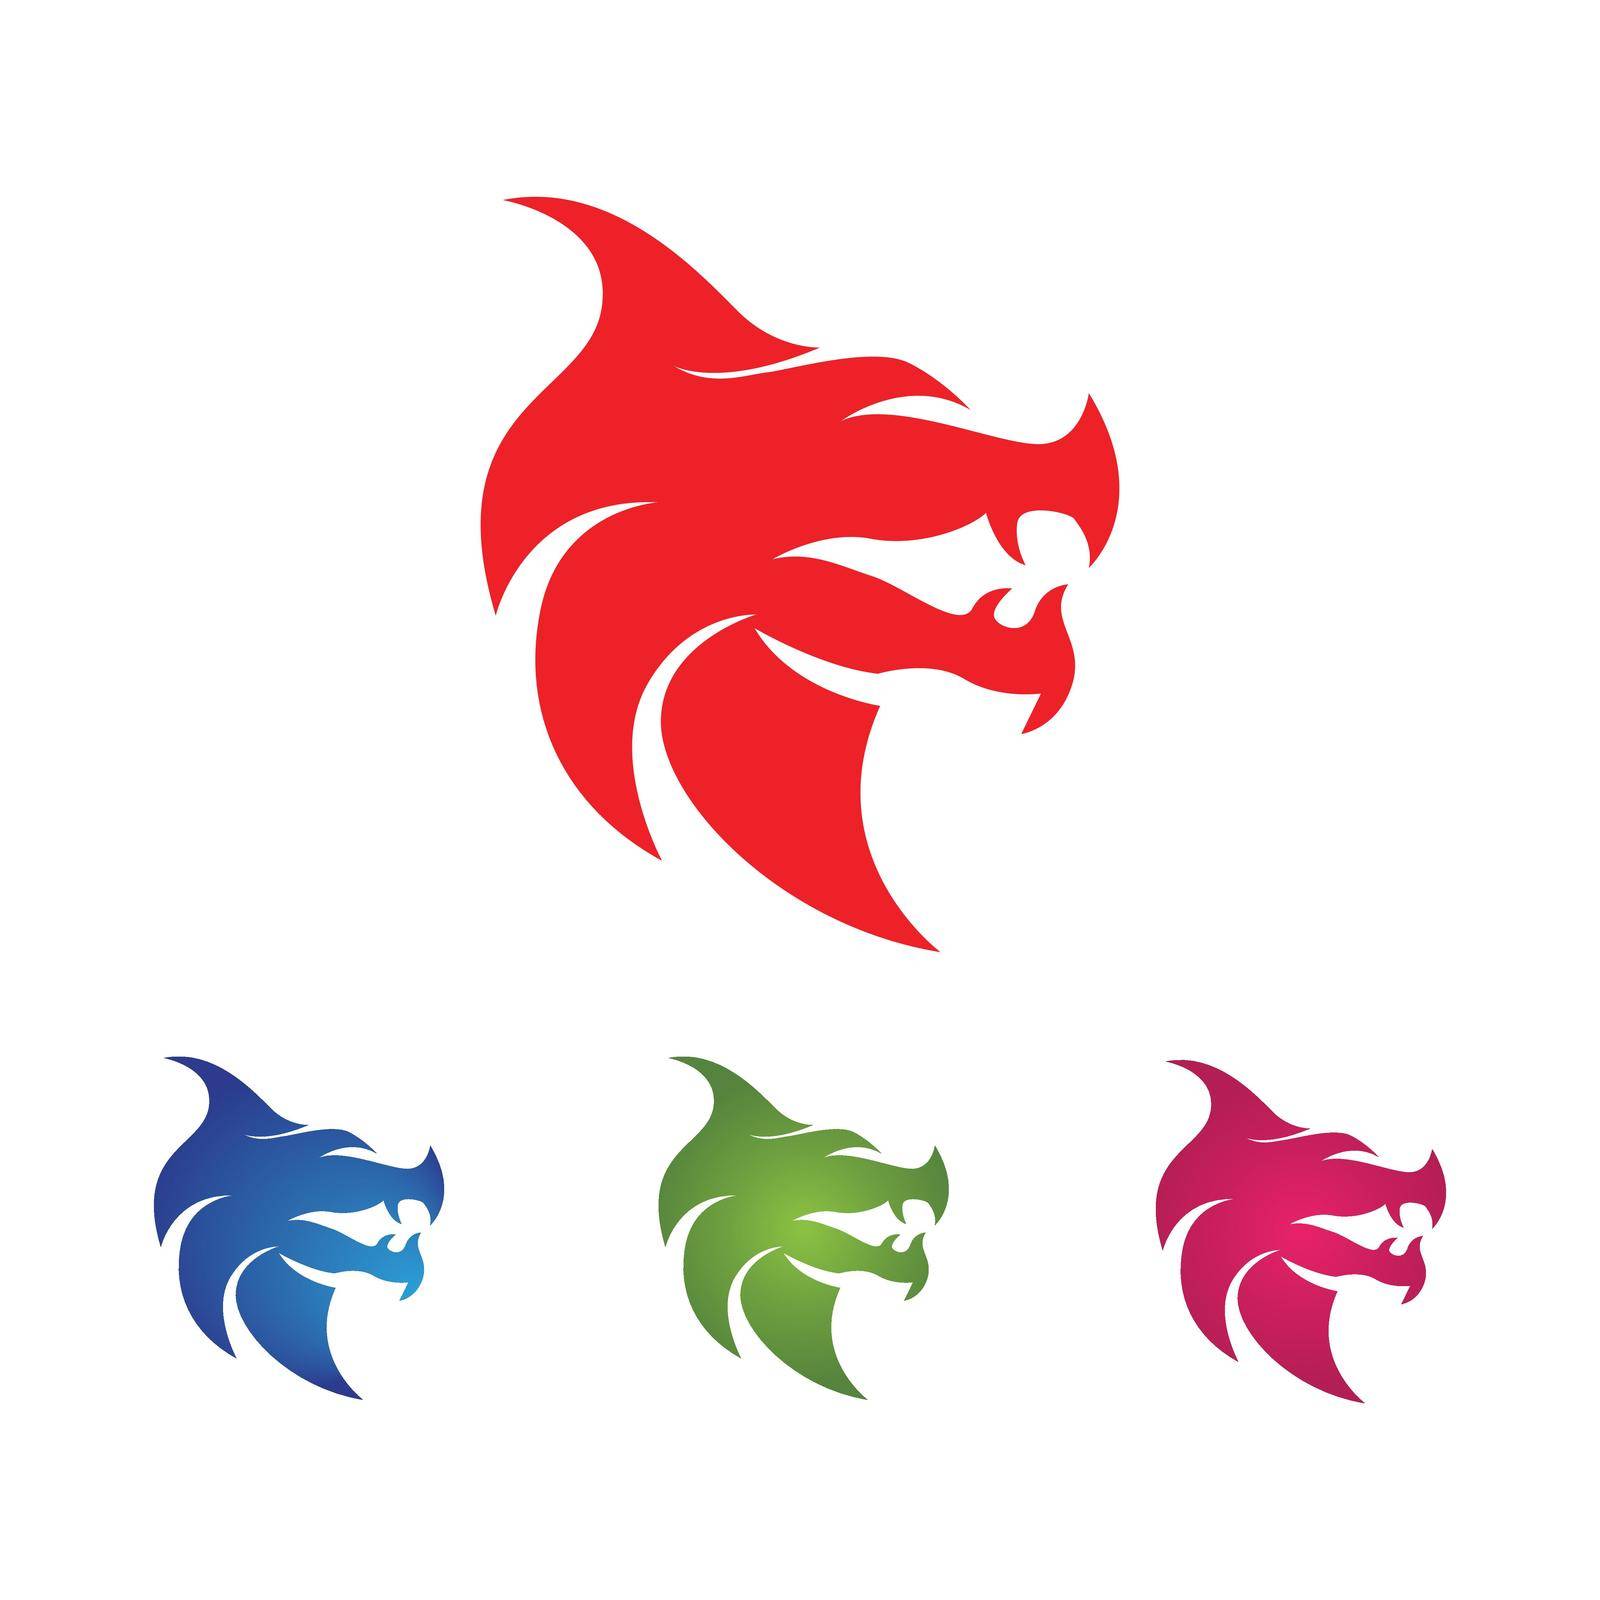 Dragon head vector image logo and symbol by Mrsongrphc